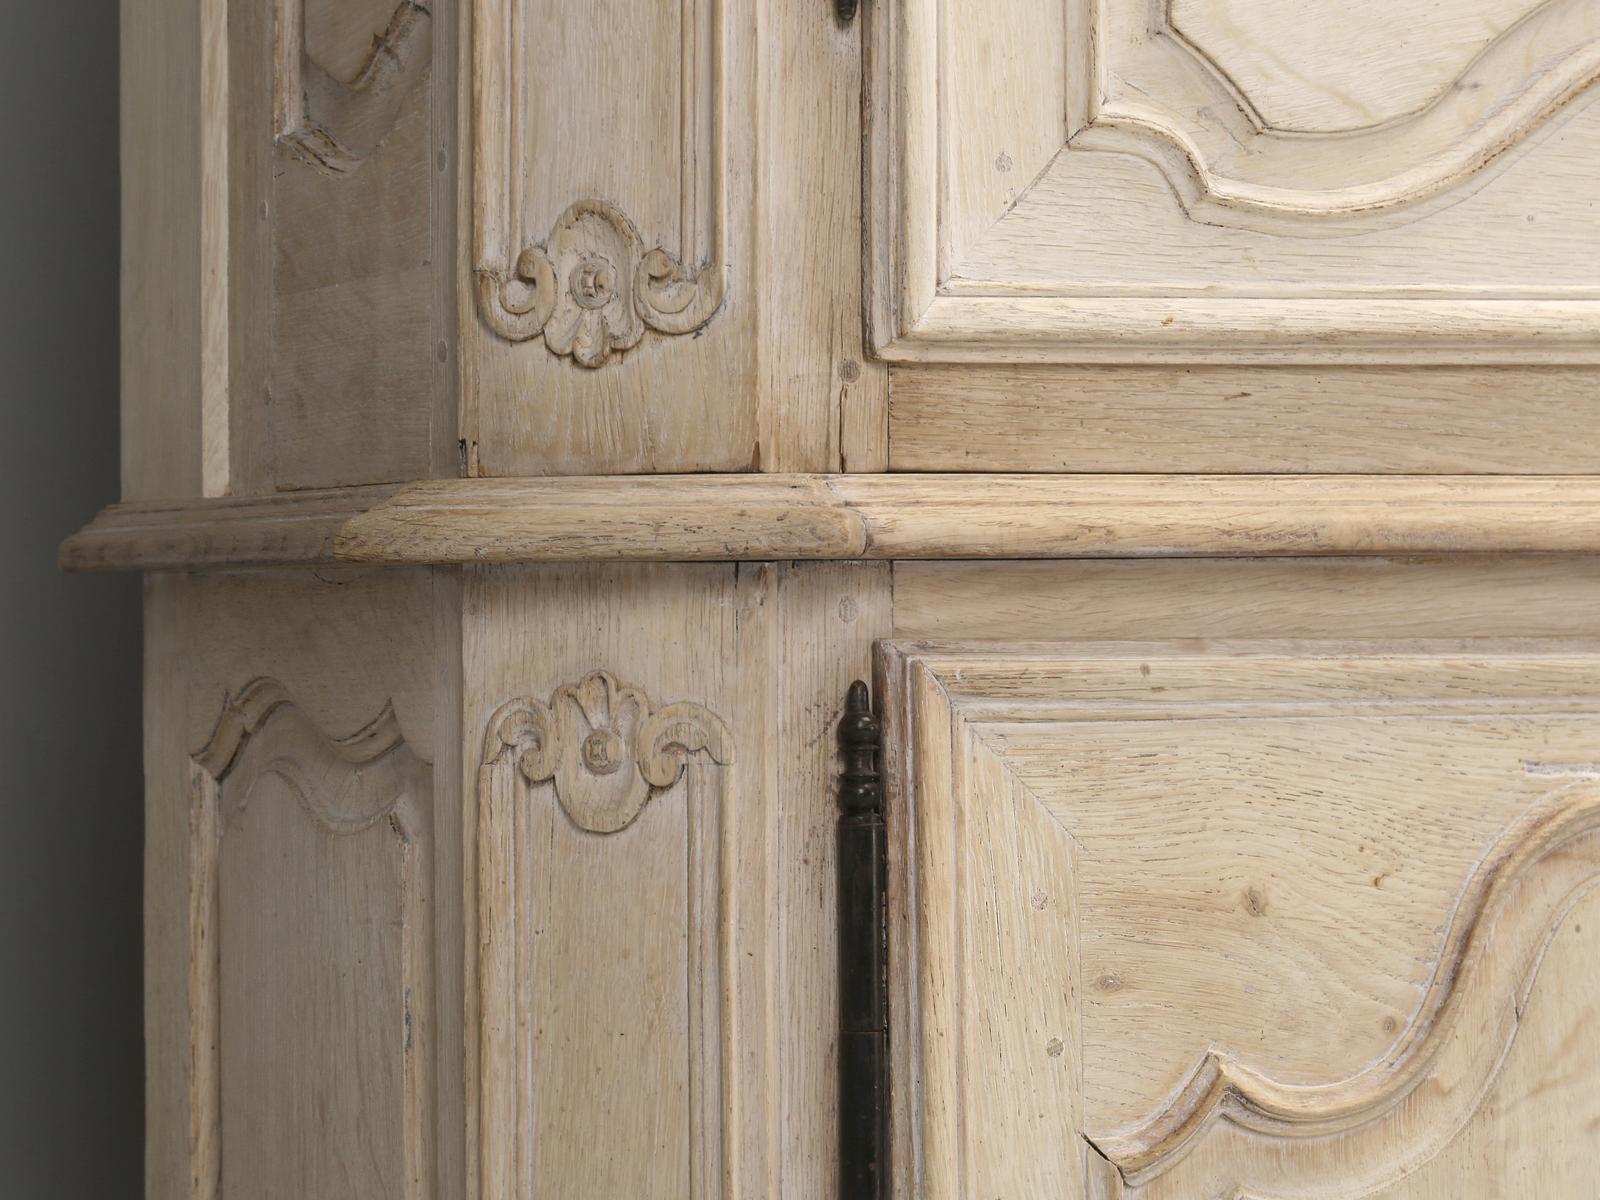 Steel Antique French Bookcase or Cabinet in Limed White Oak Older Restoration c1800's For Sale